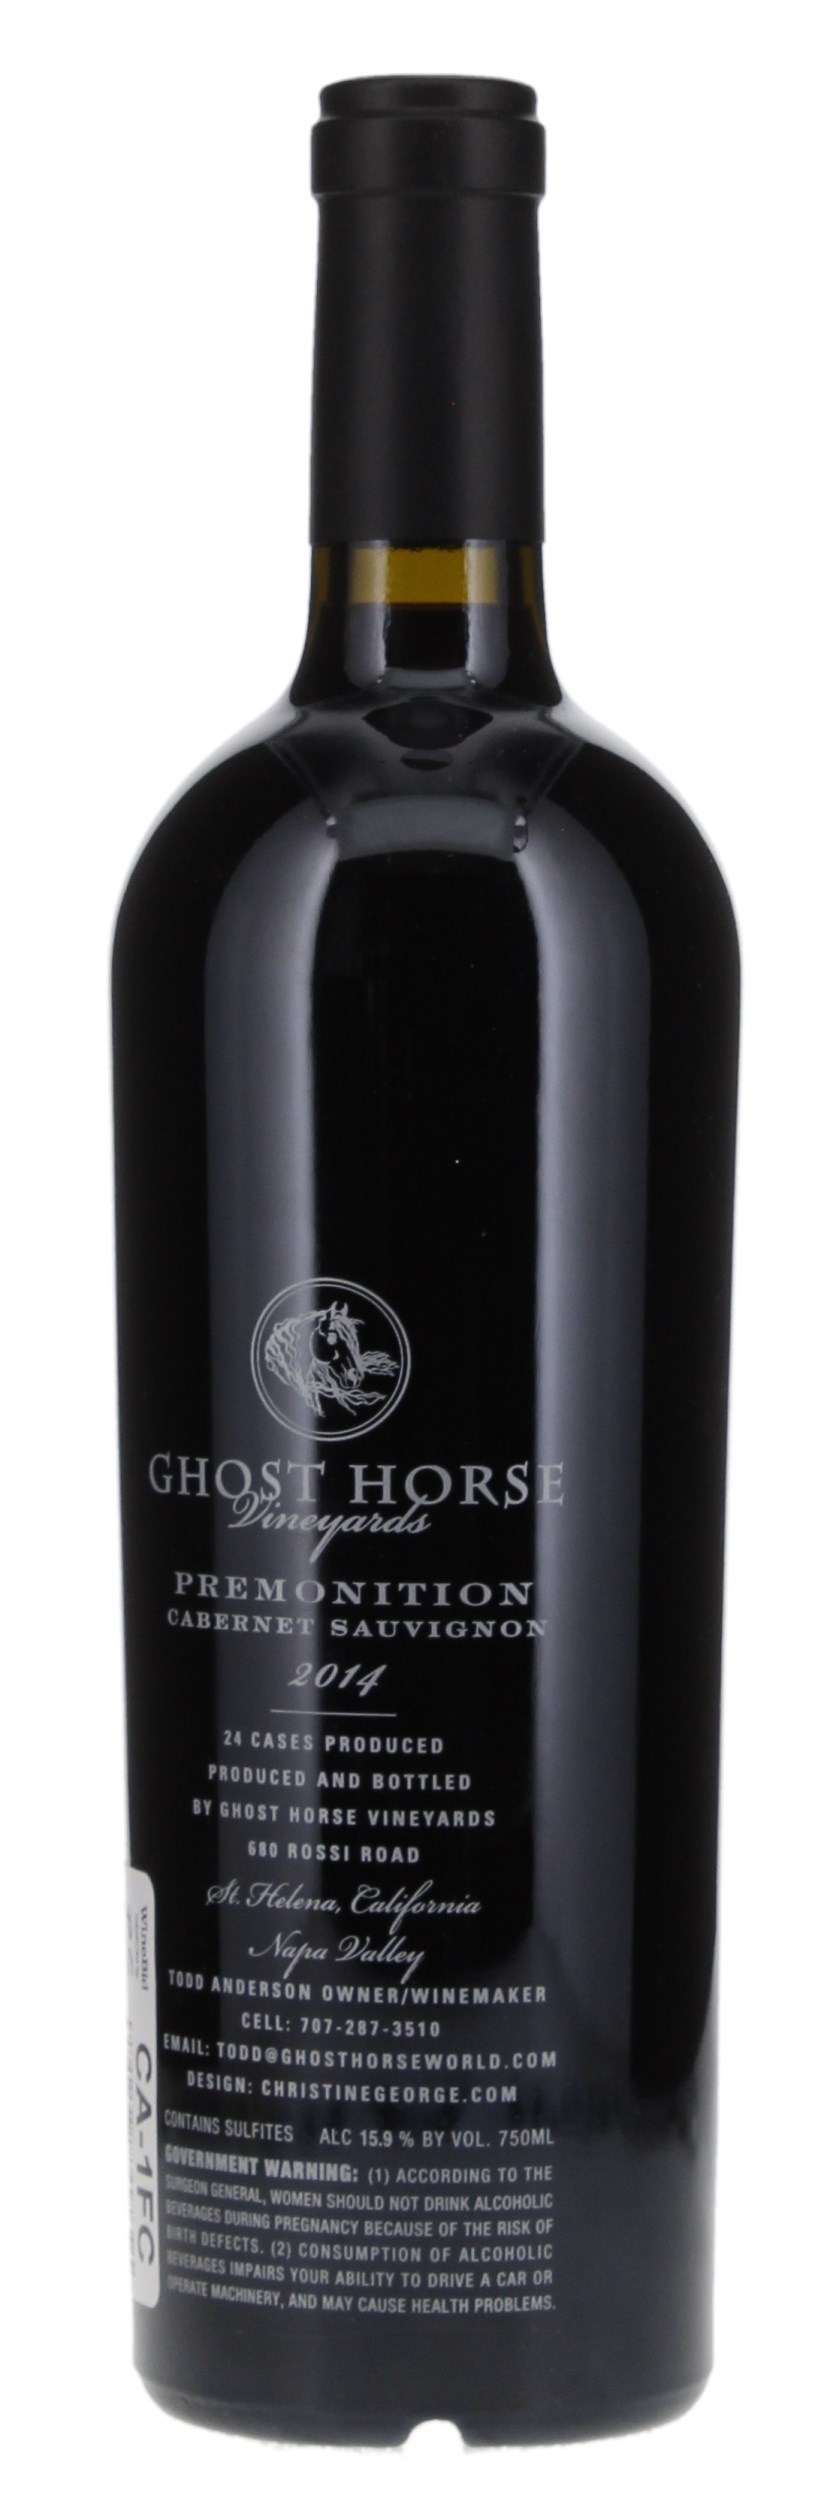 2014 Ghost Horse Vineyard Premonition Cabernet Sauvignon, 750ml